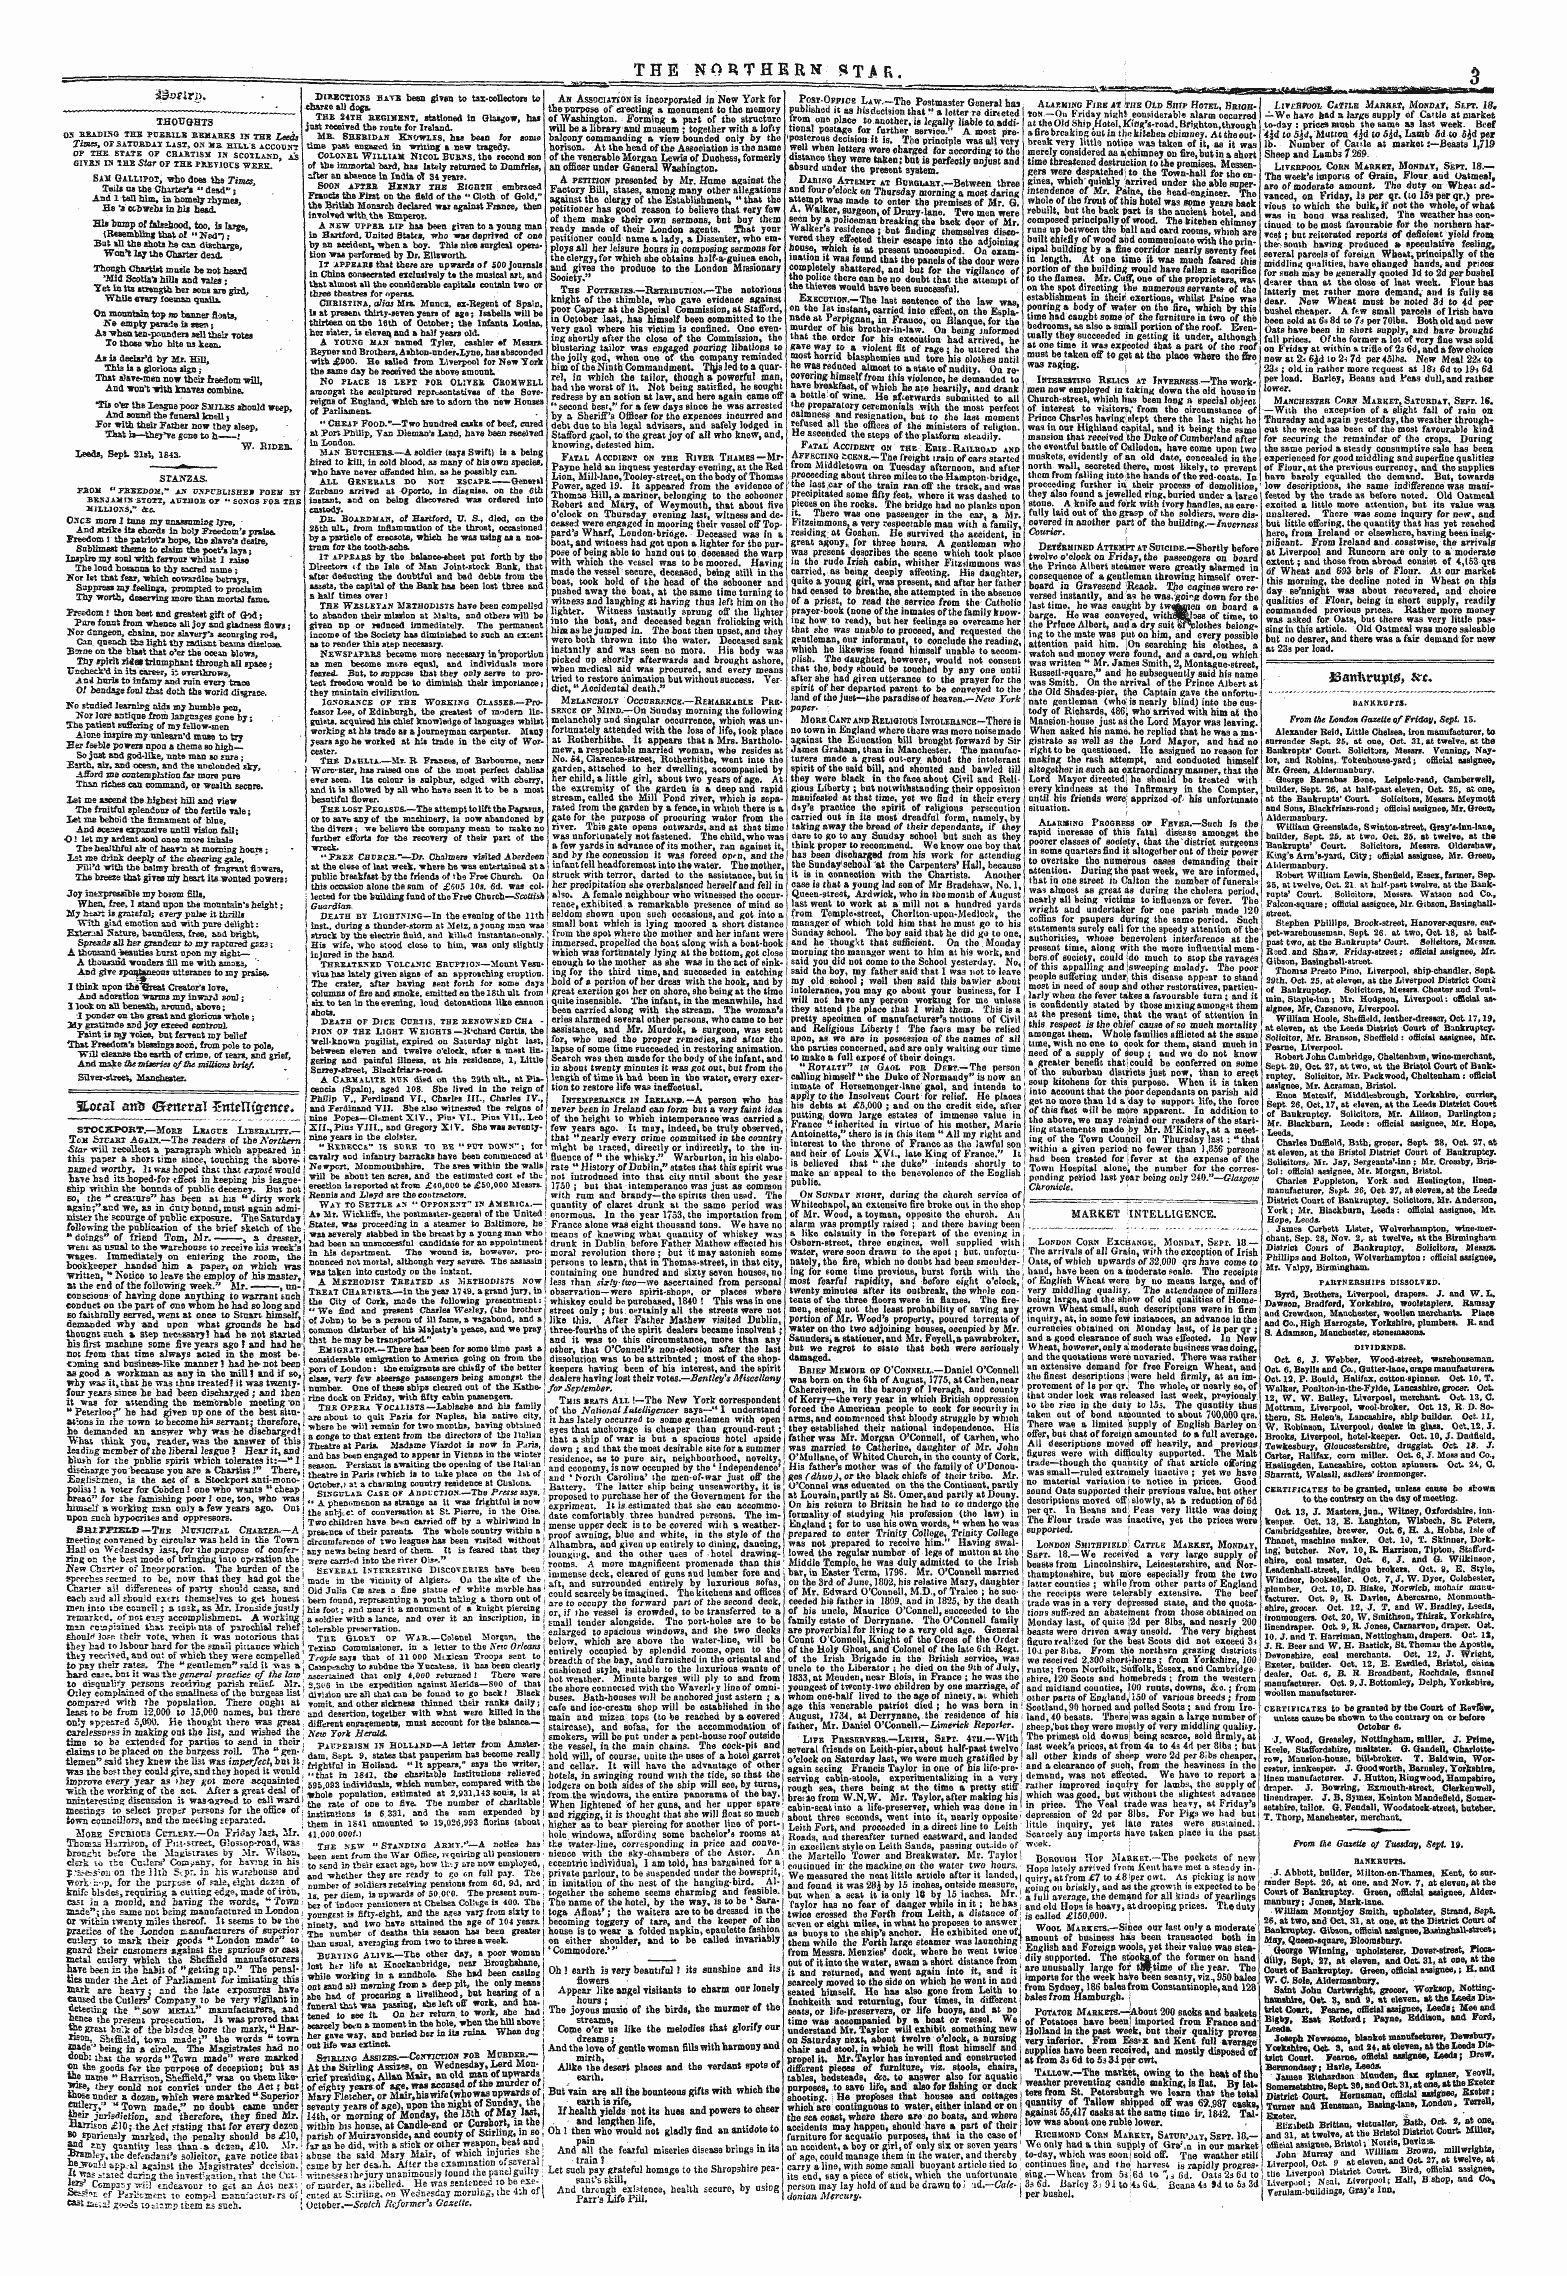 Northern Star (1837-1852): jS F Y, 1st edition - Ftasl An$ (Btneral Zntsnfamt?.